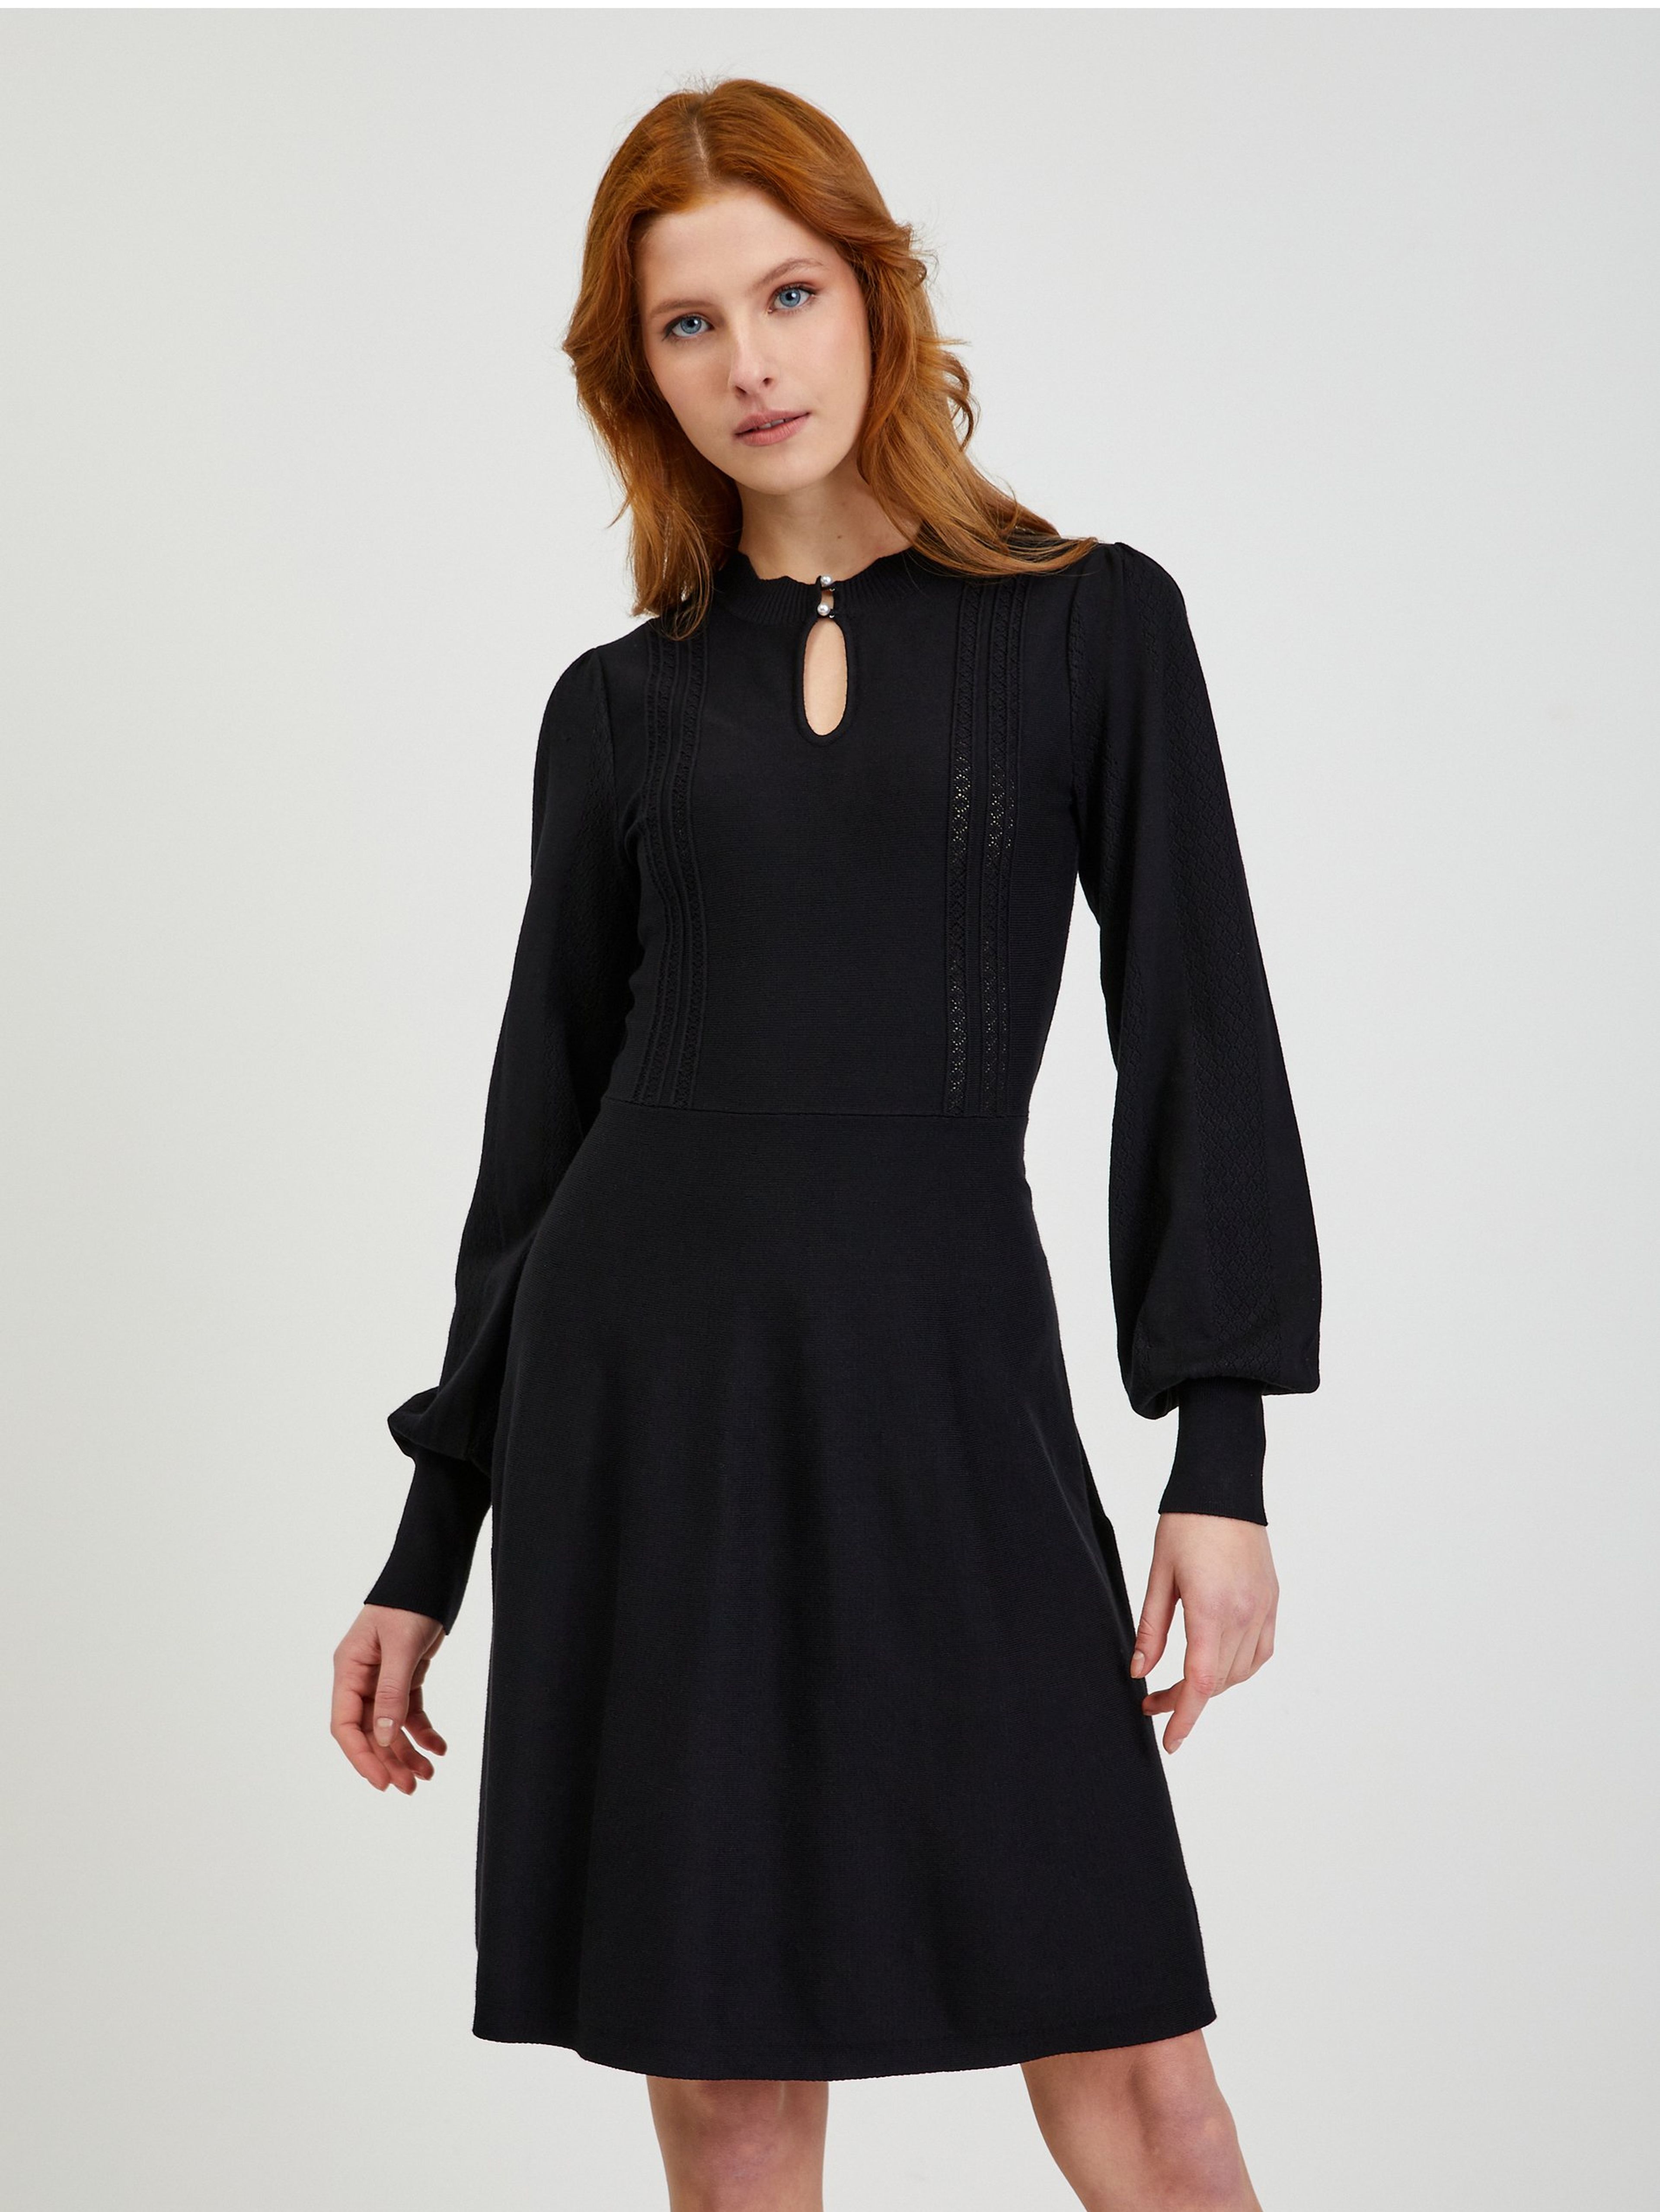 Czarna damska sukienka swetrowa ORSAY